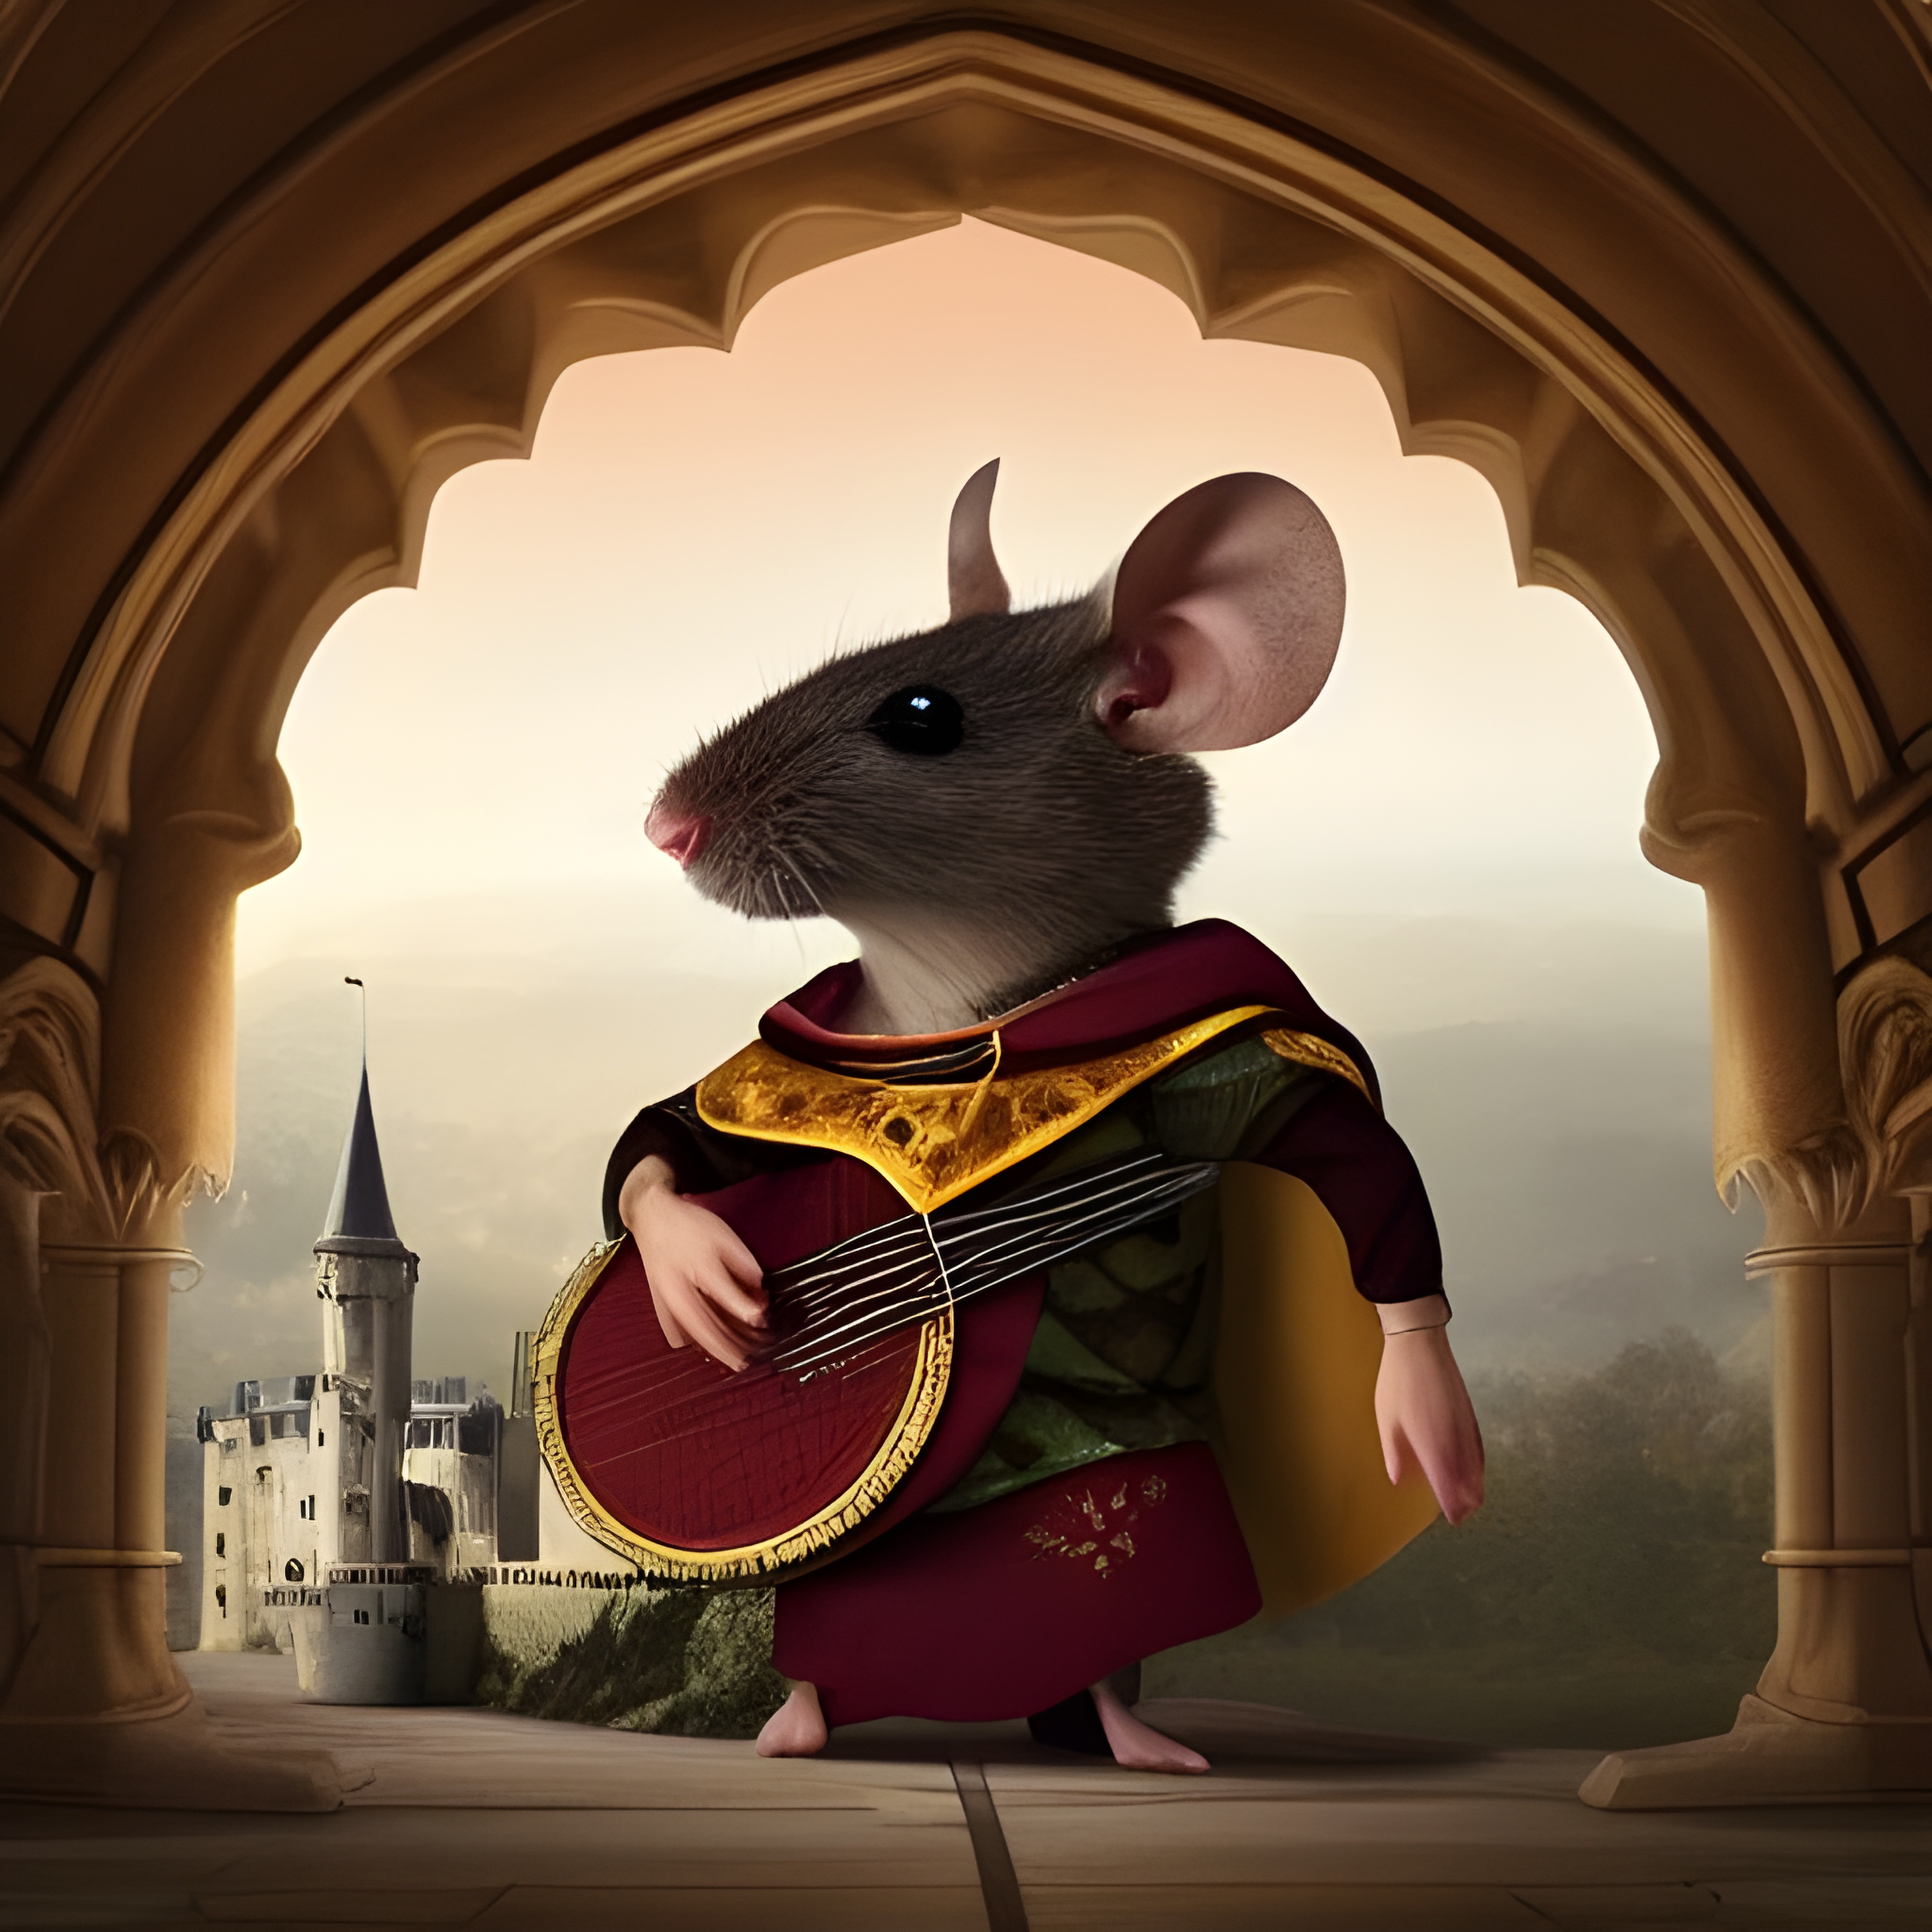 Sir Mouse